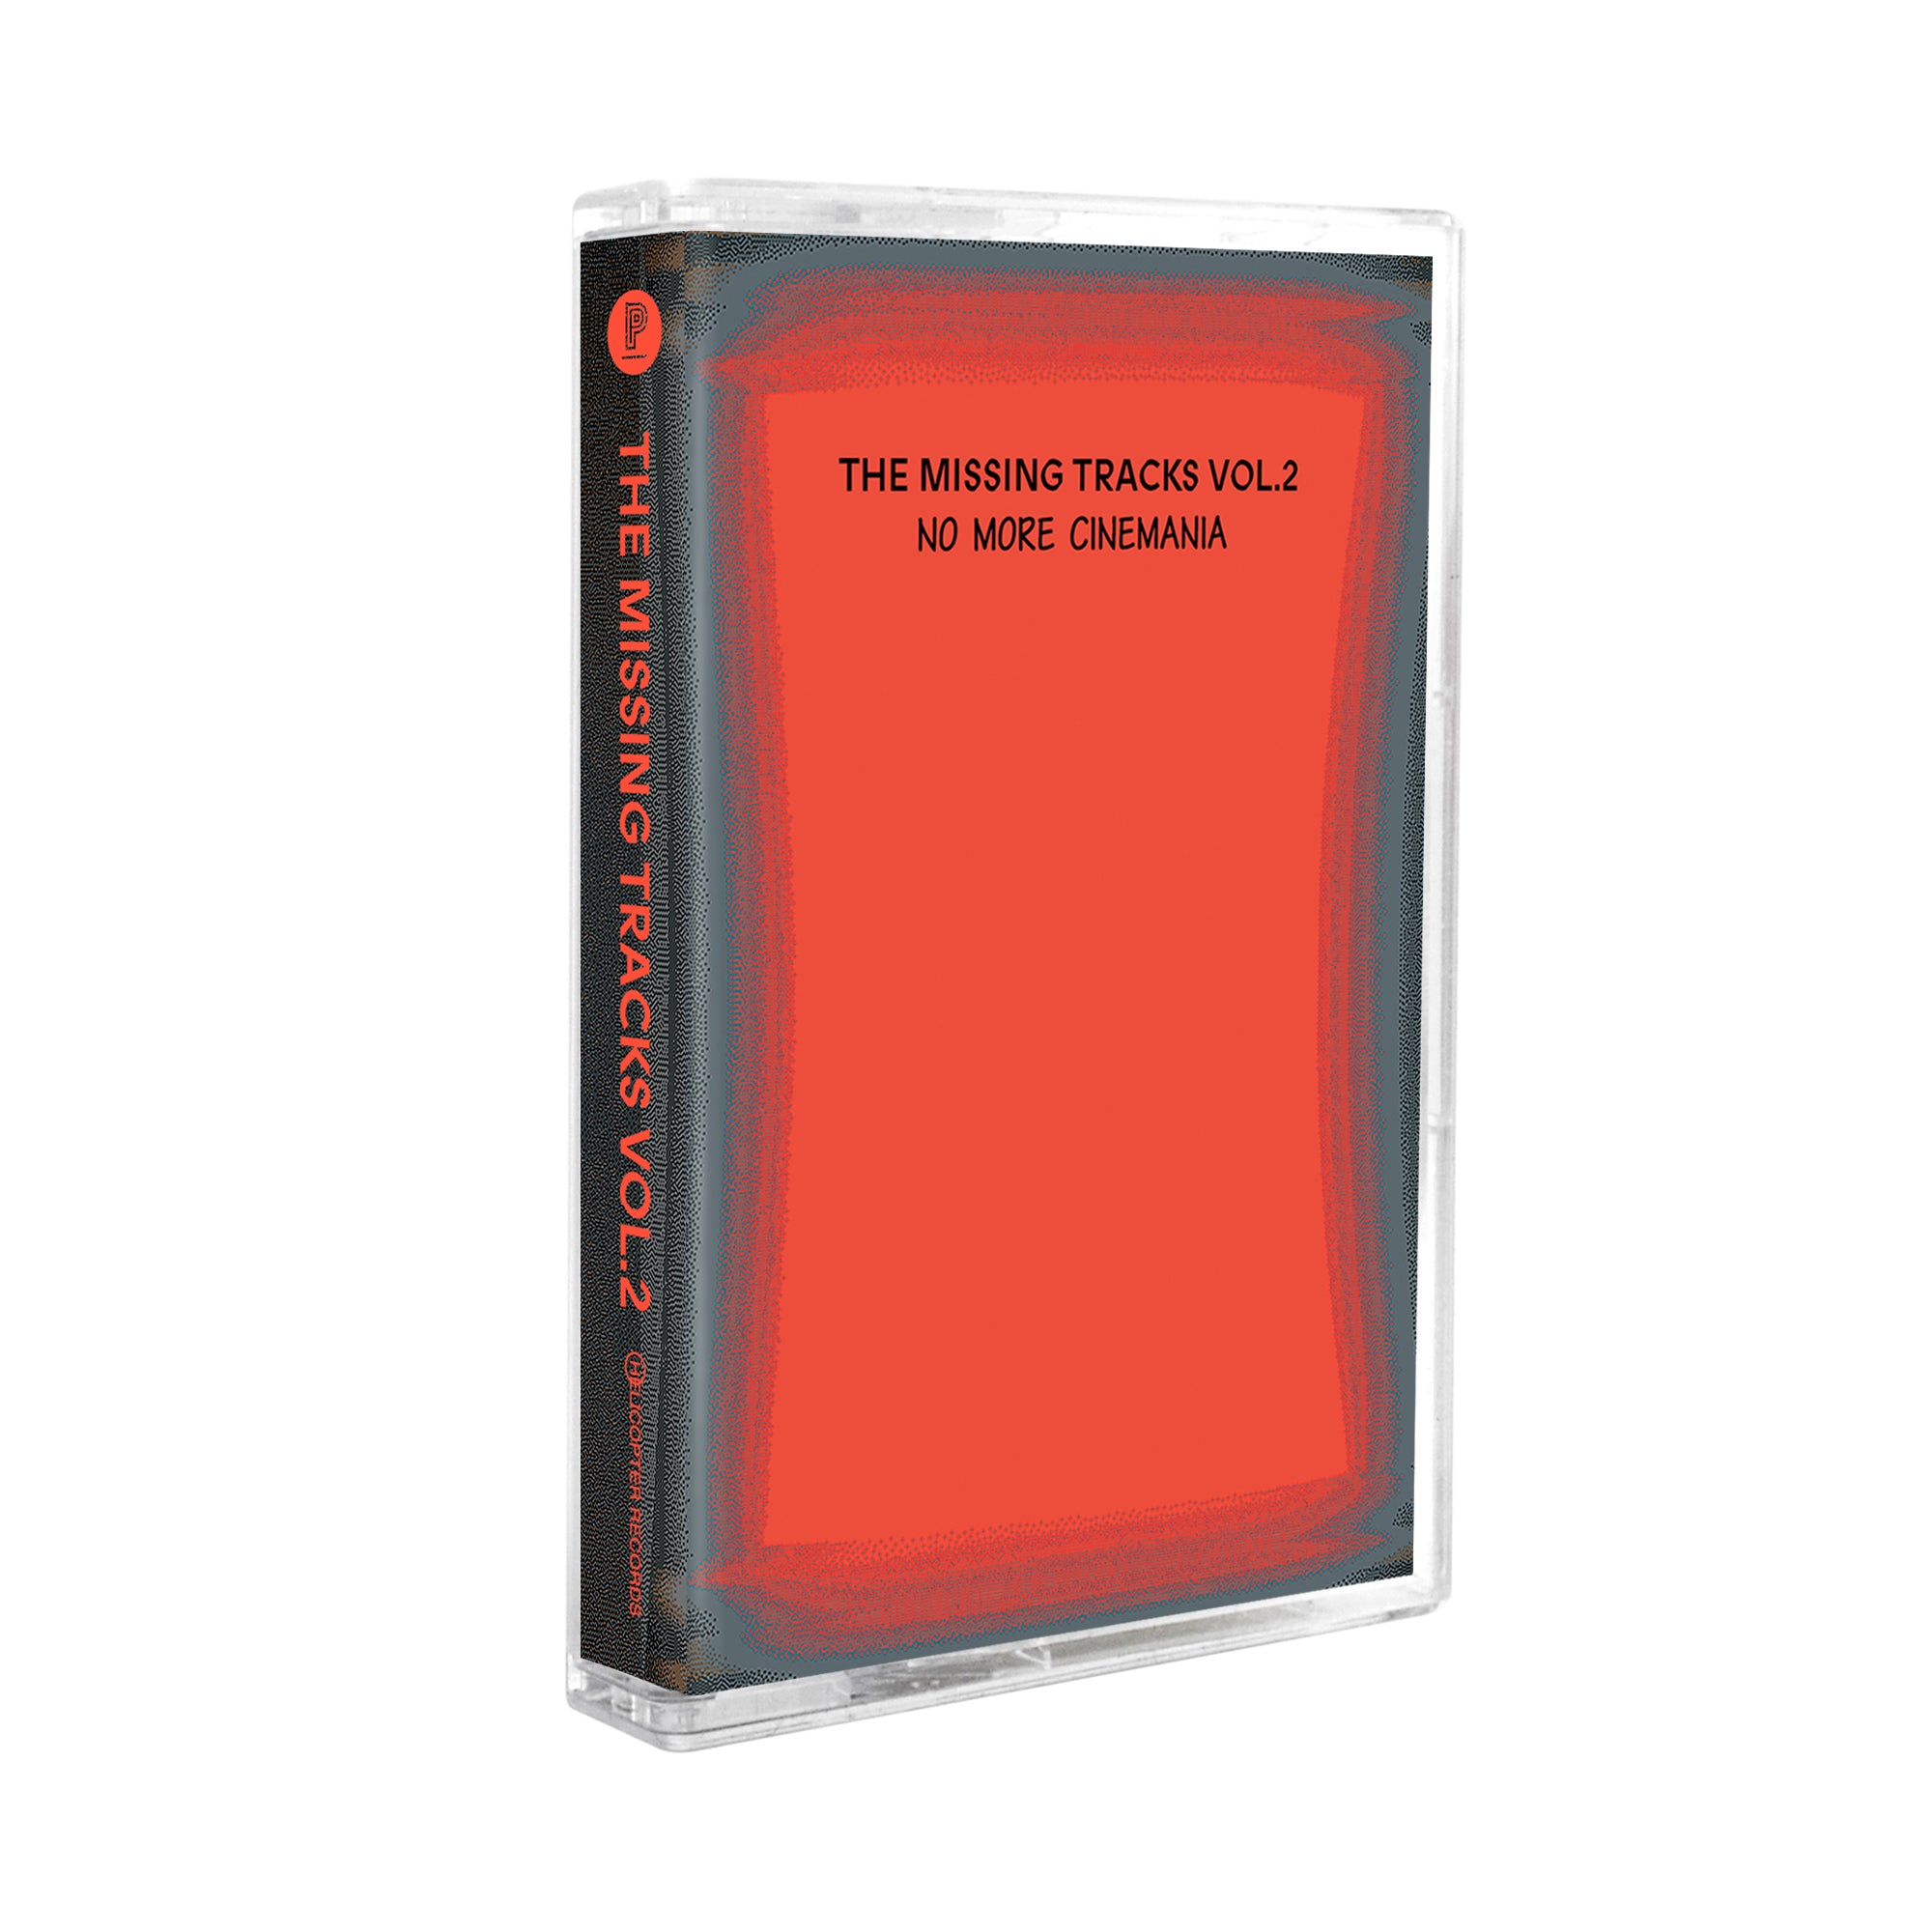 Soundtrack Cassette Tape: The Missing Tracks Vol.2